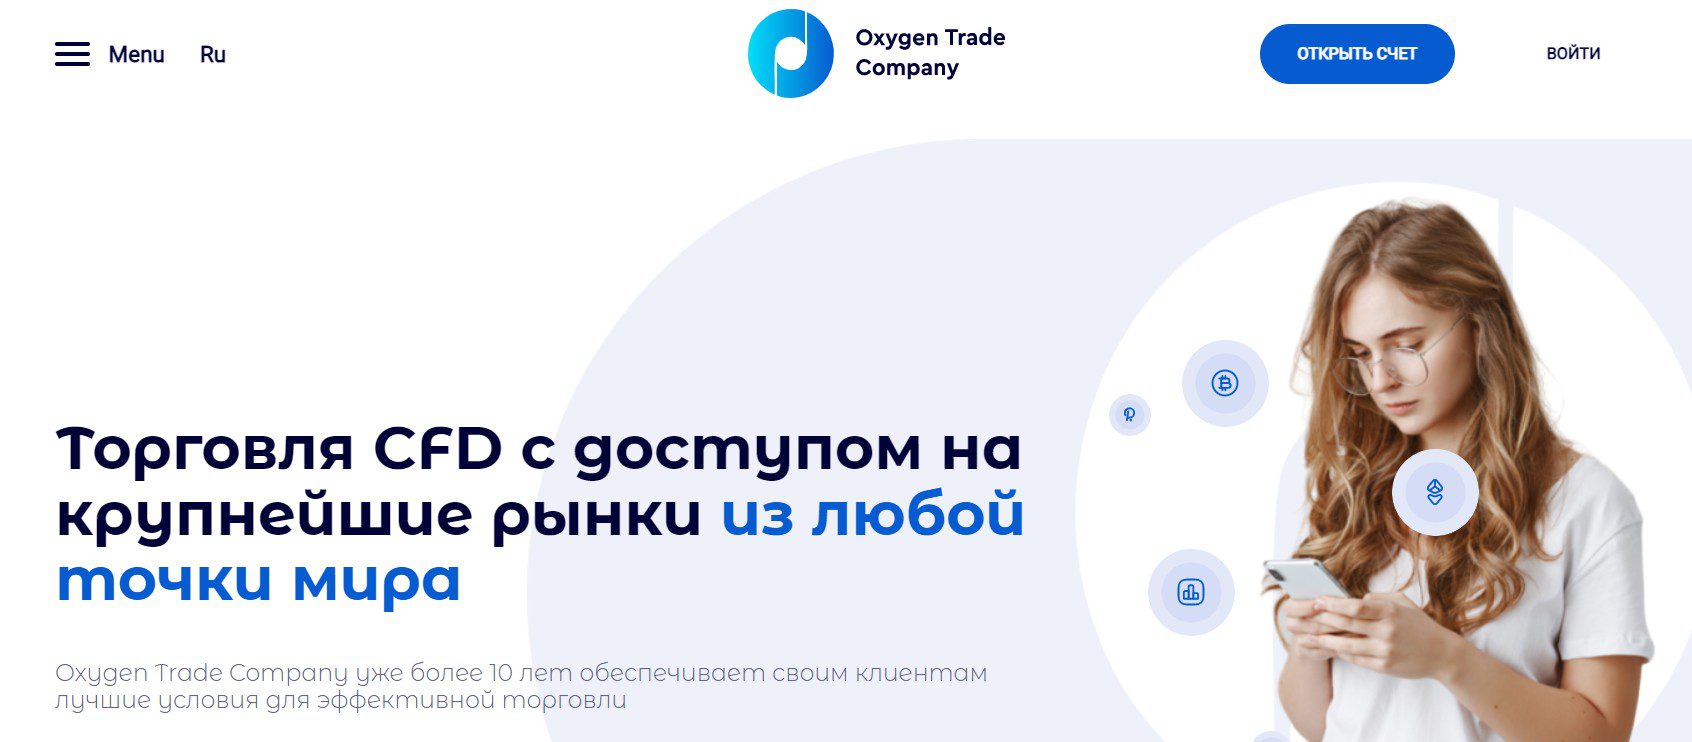 Обзор проекта Oxygen Trade Company